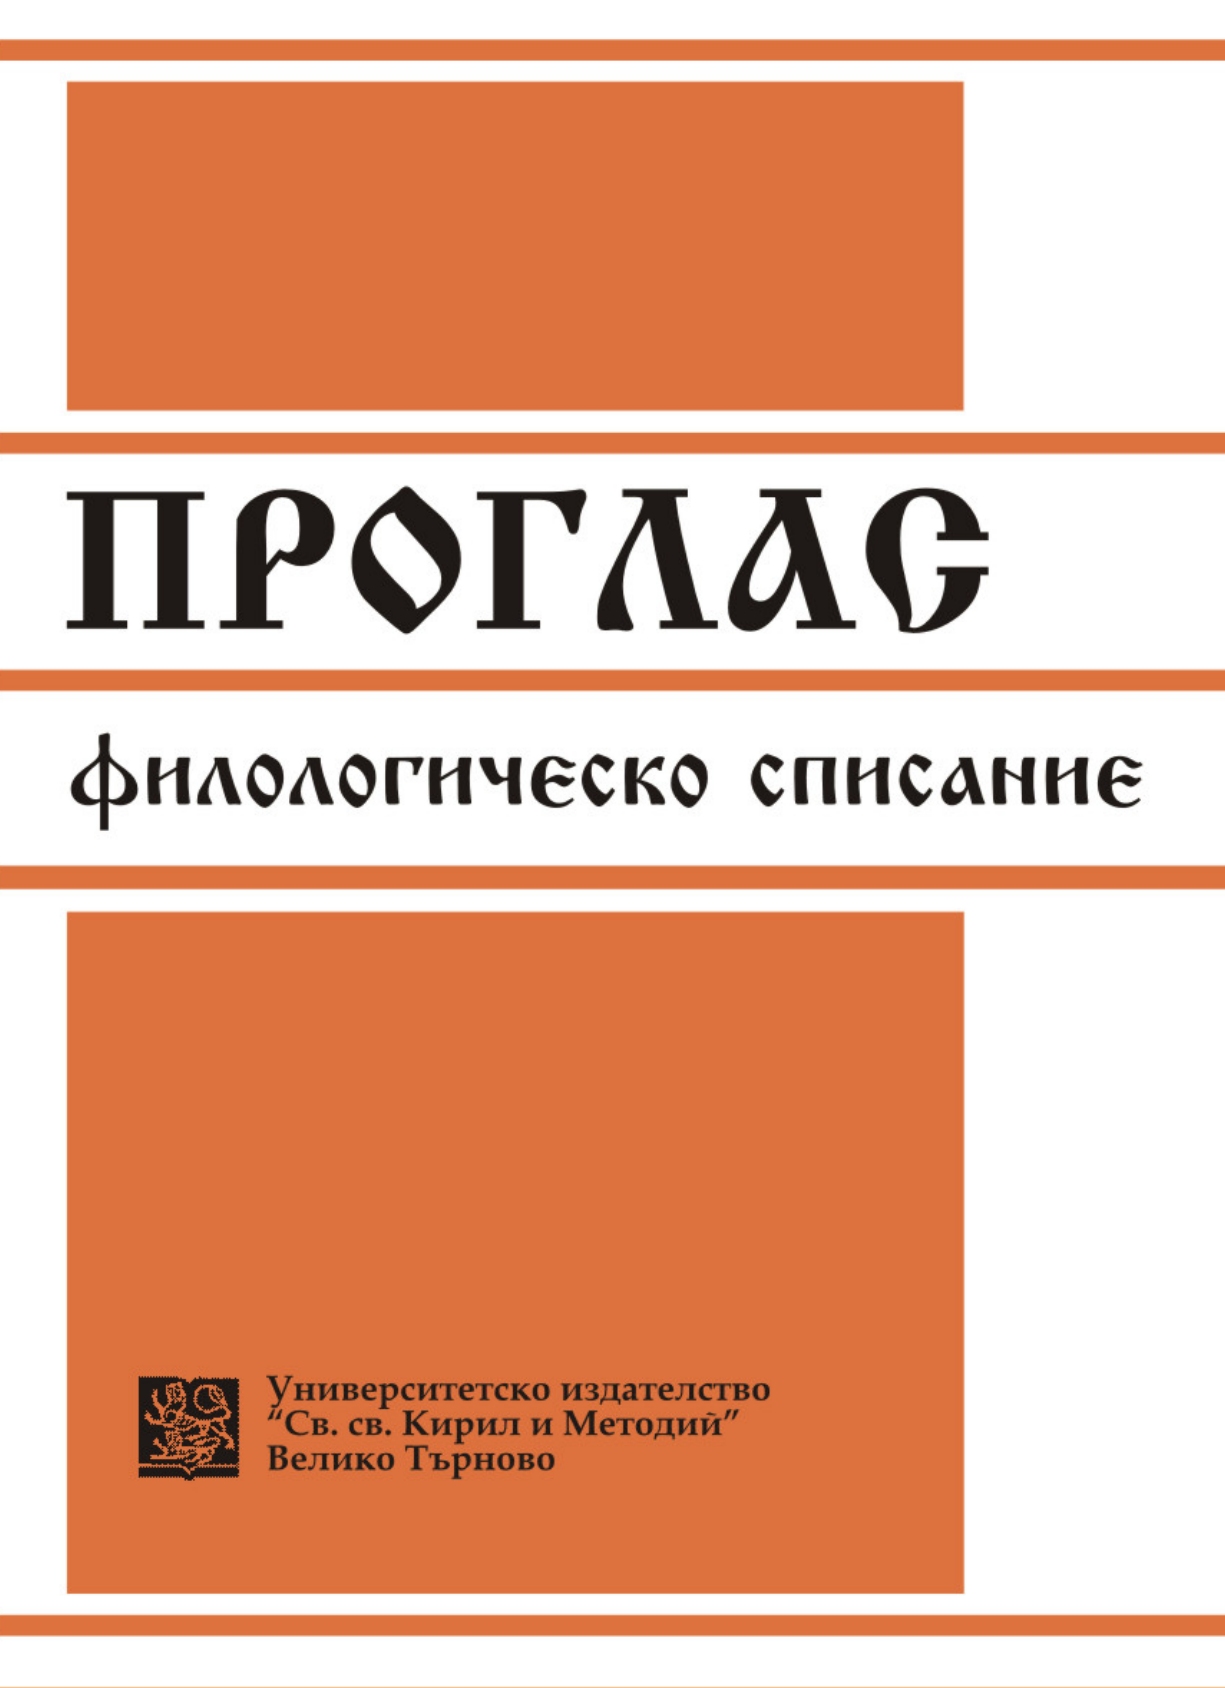 Botev and Bulgarian Literature Cover Image